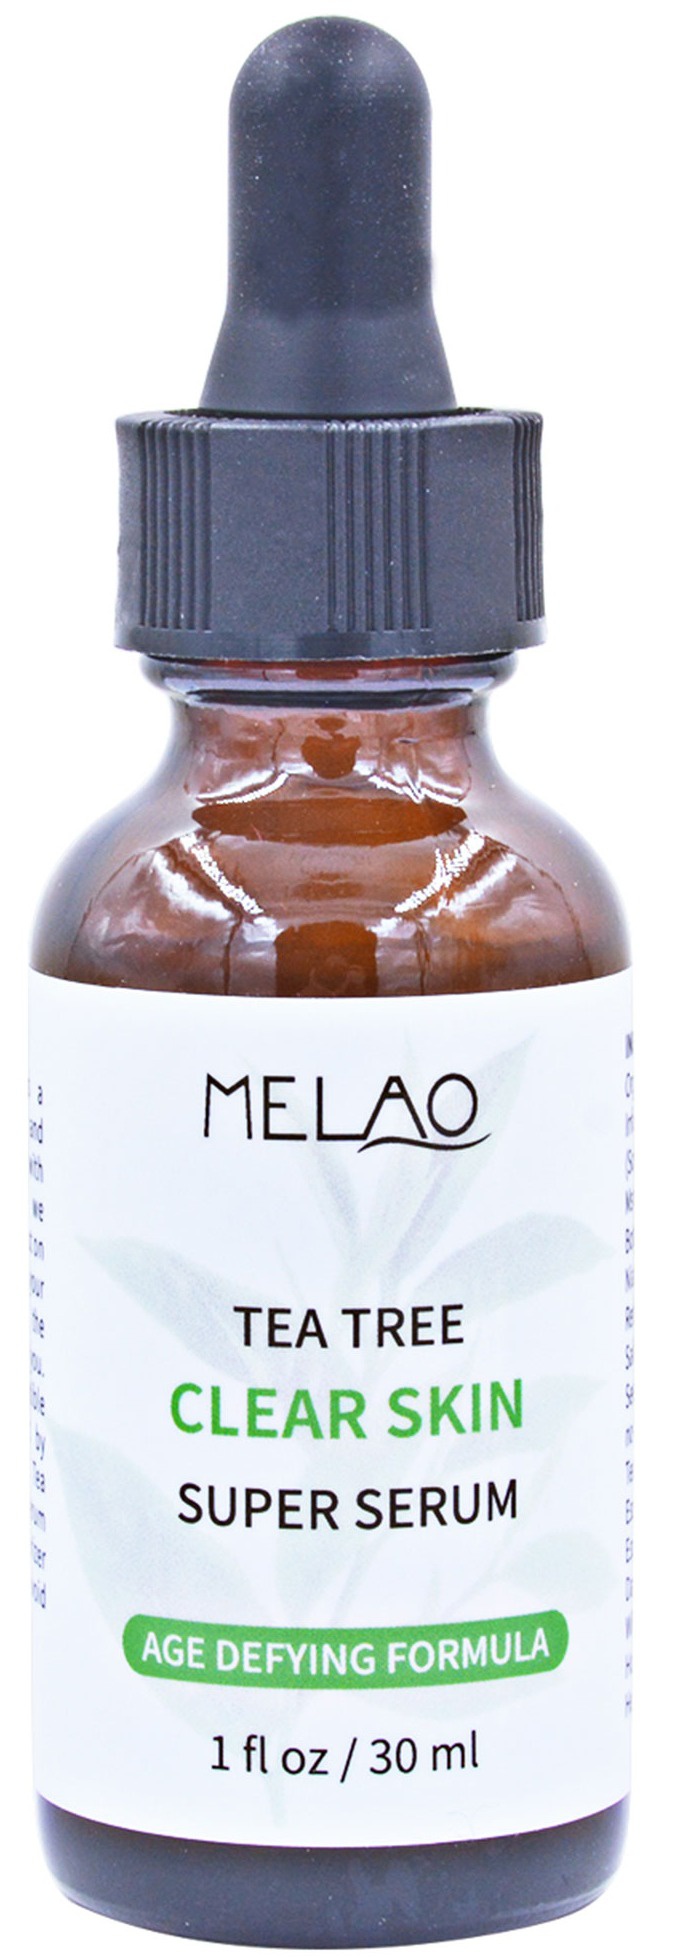 MELAO Tea Tree Clear Skin Super Serum